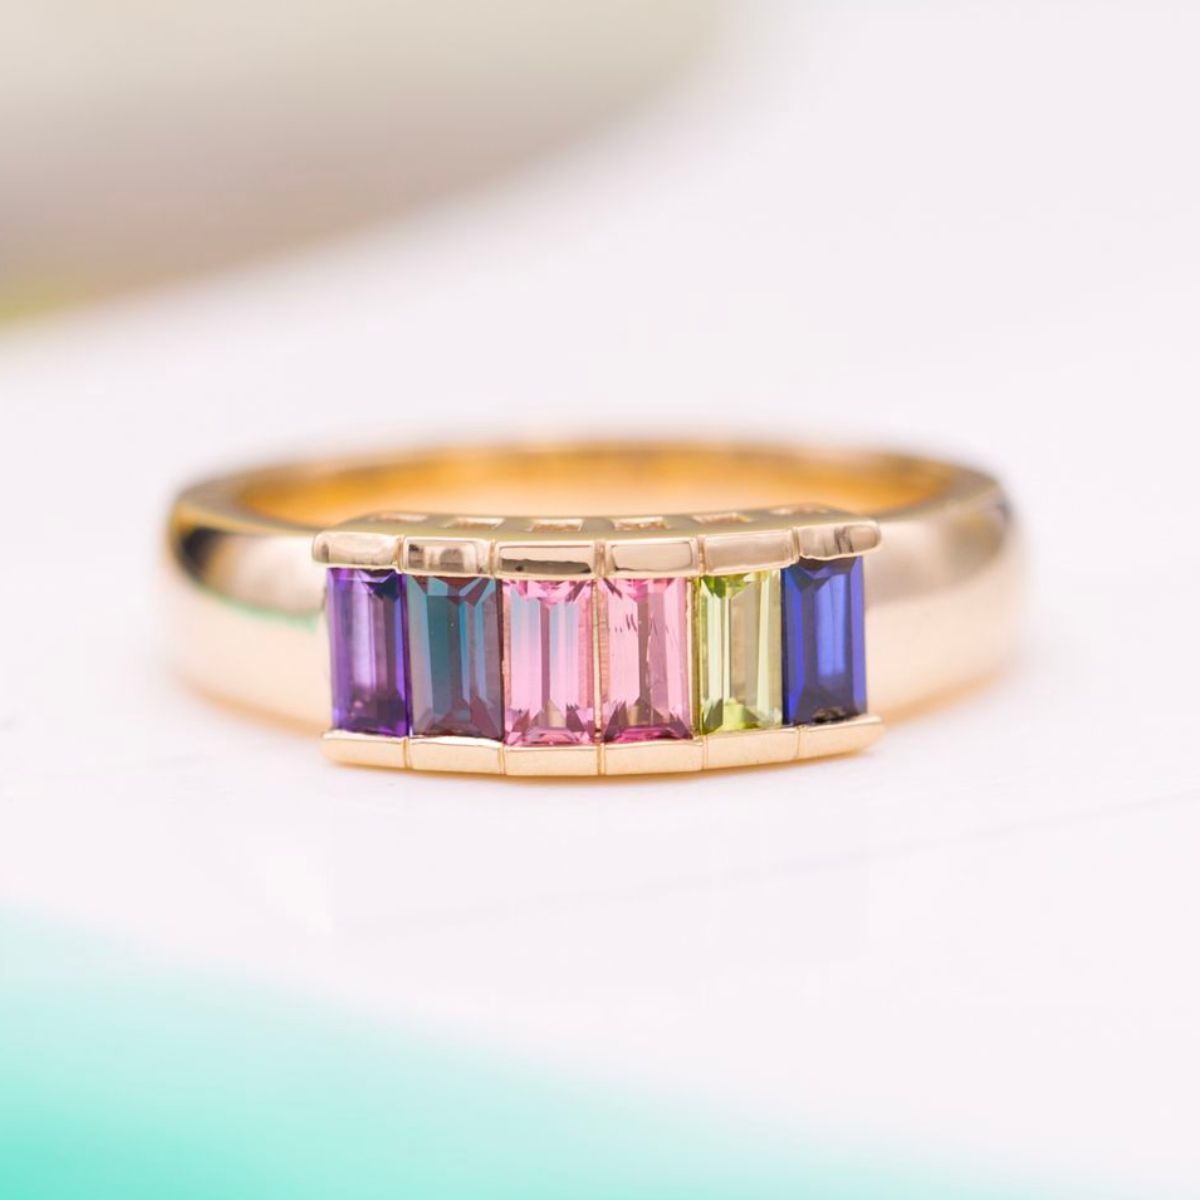 Baguette cut engagement ring designs | CustomMade.com